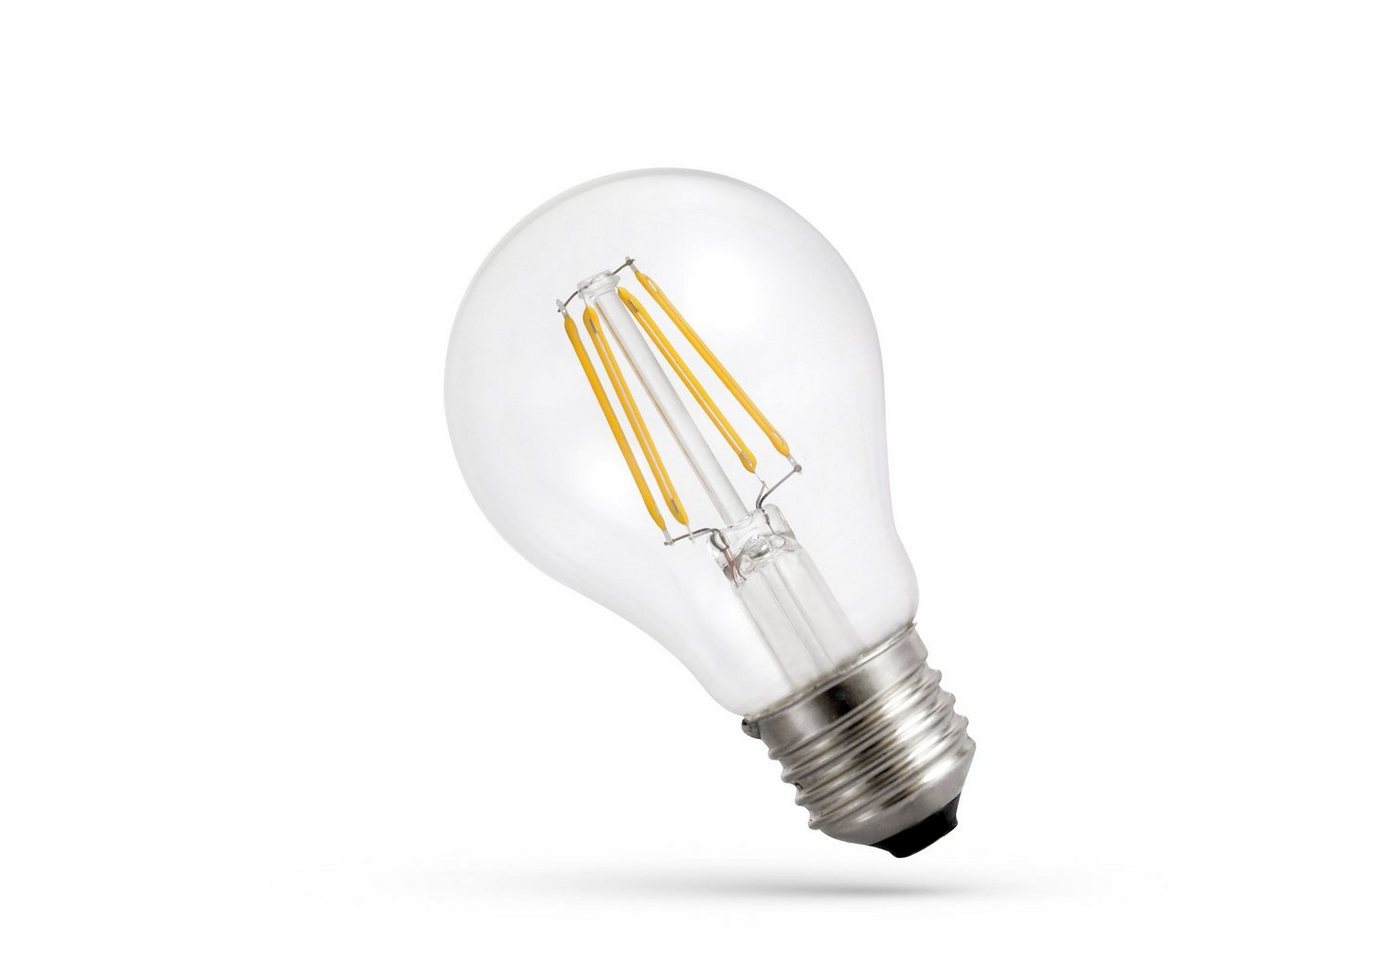 SpectrumLED LED-Leuchtmittel LED E27 A60 Filament klar 7W Birne 600lm 300° Extra Warmweiß 1800K, E27, Extra-Warmweiß, FIlament von SpectrumLED